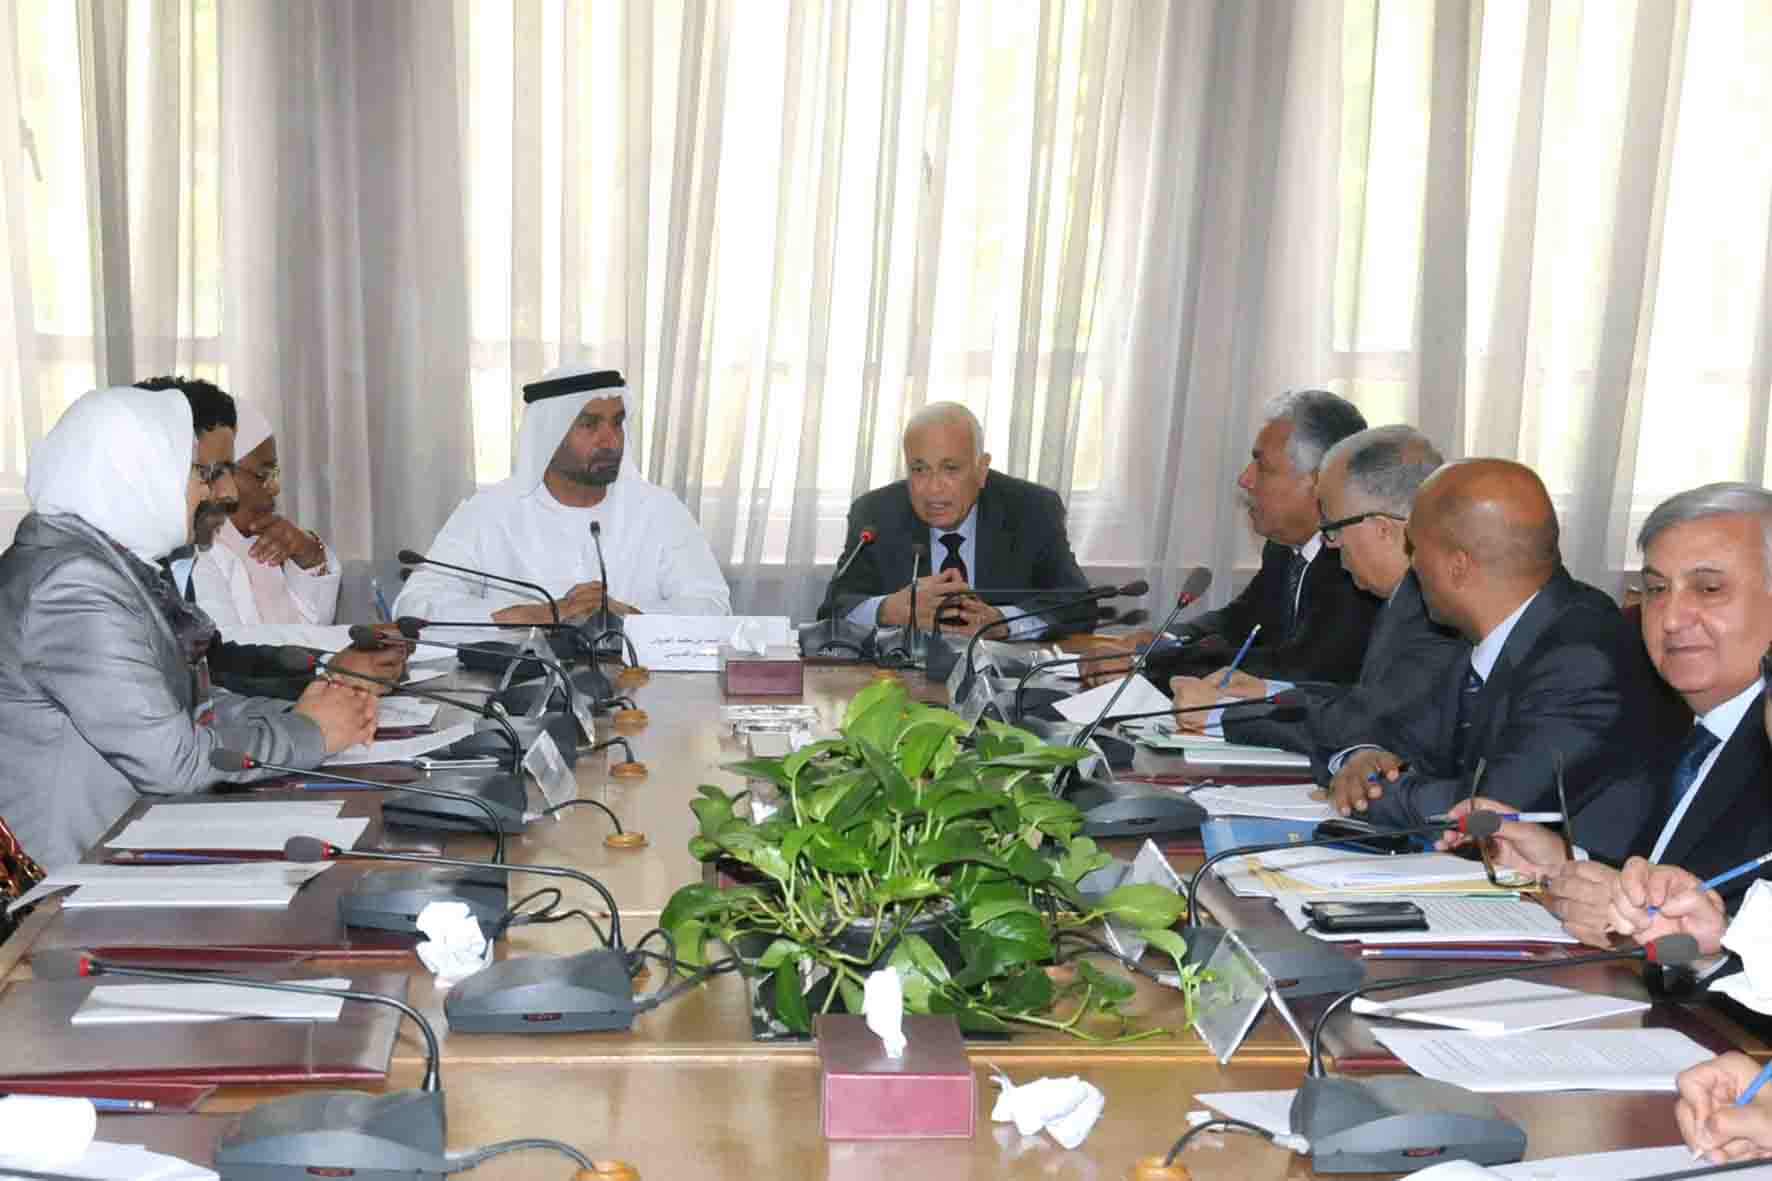 Arab Parliament (AP) president Ahmed bin Mohammed Al-Jarwan and Arab League Secretary General Nabil Al-Araby during the urgent meeting